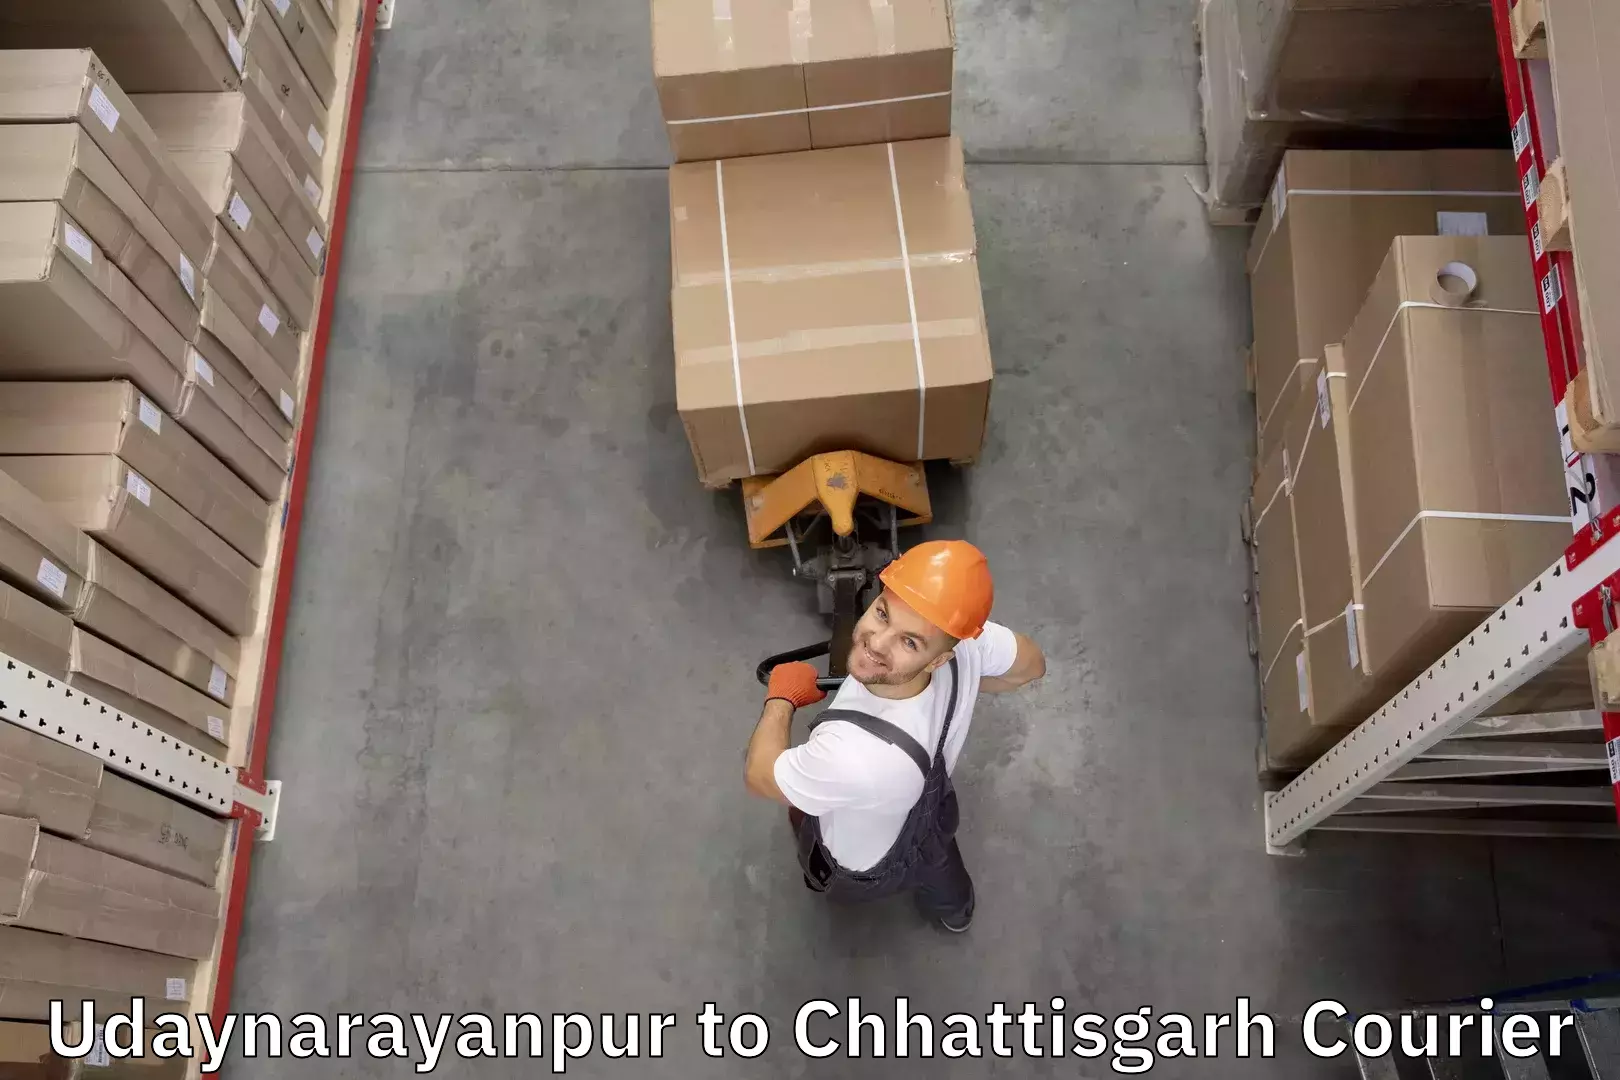 Same day luggage service Udaynarayanpur to Bijapur Chhattisgarh